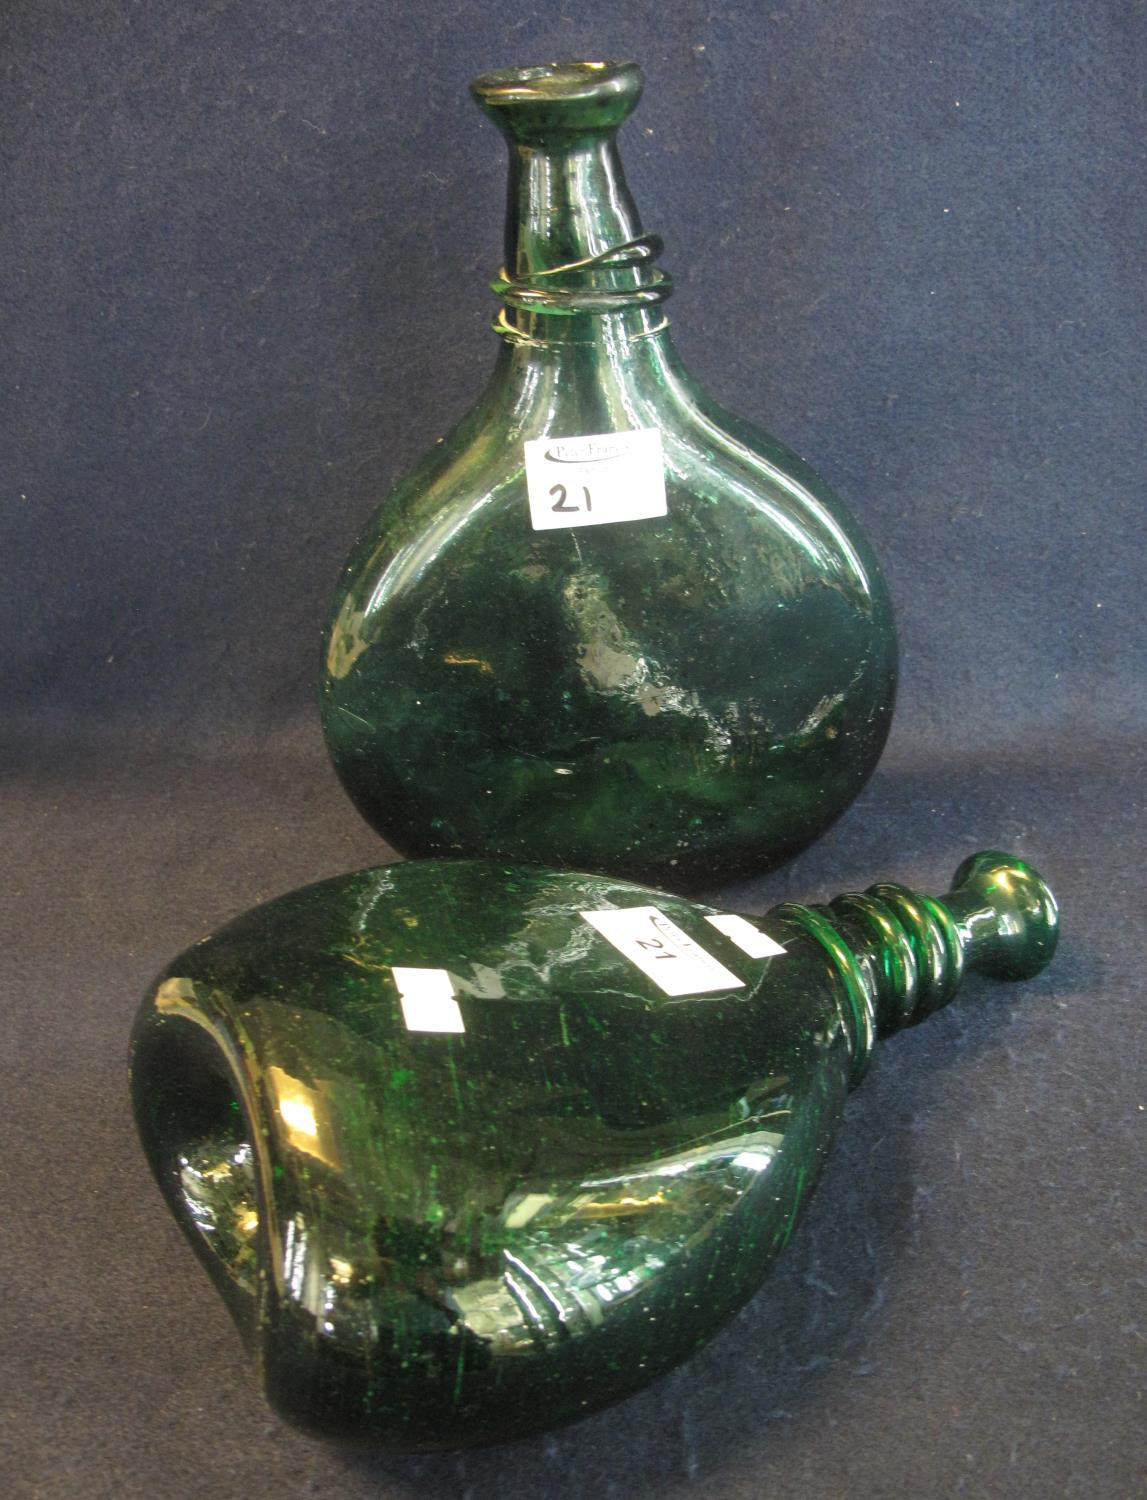 Two similar green glass soda type flasks. (2) (B.P. 21% + VAT)